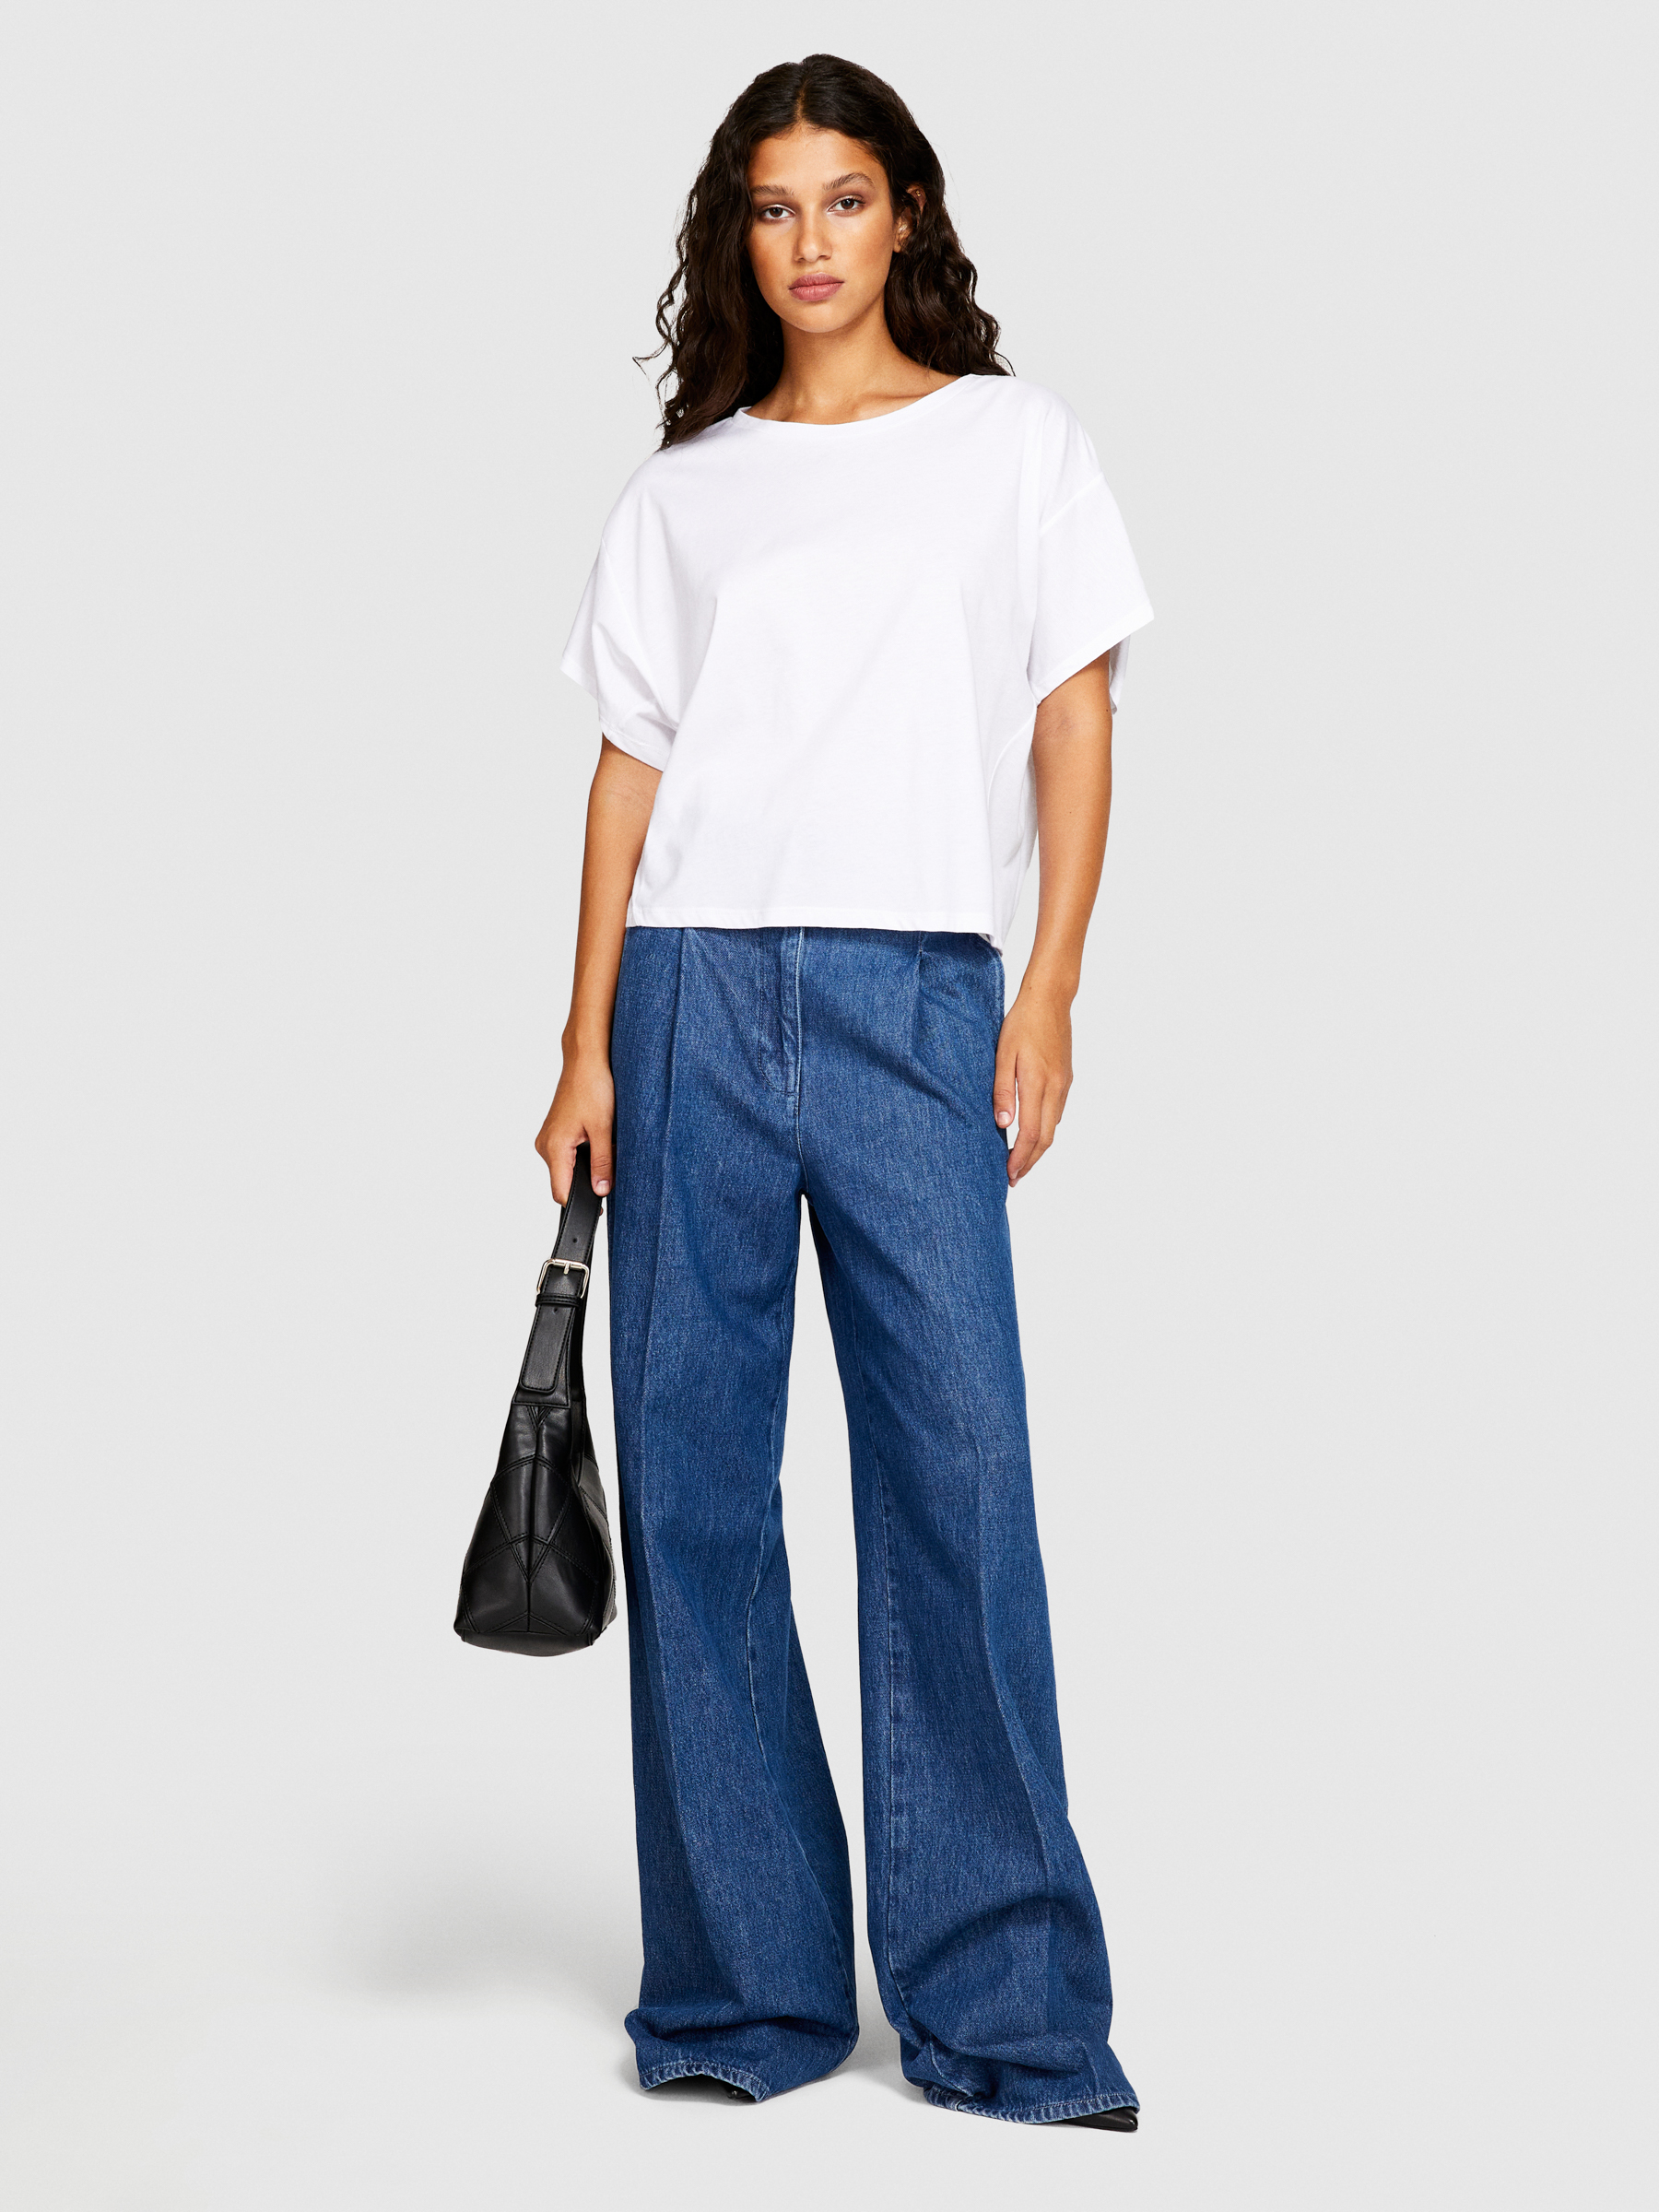 Sisley - Boxy Fit T-shirt, Woman, White, Size: M